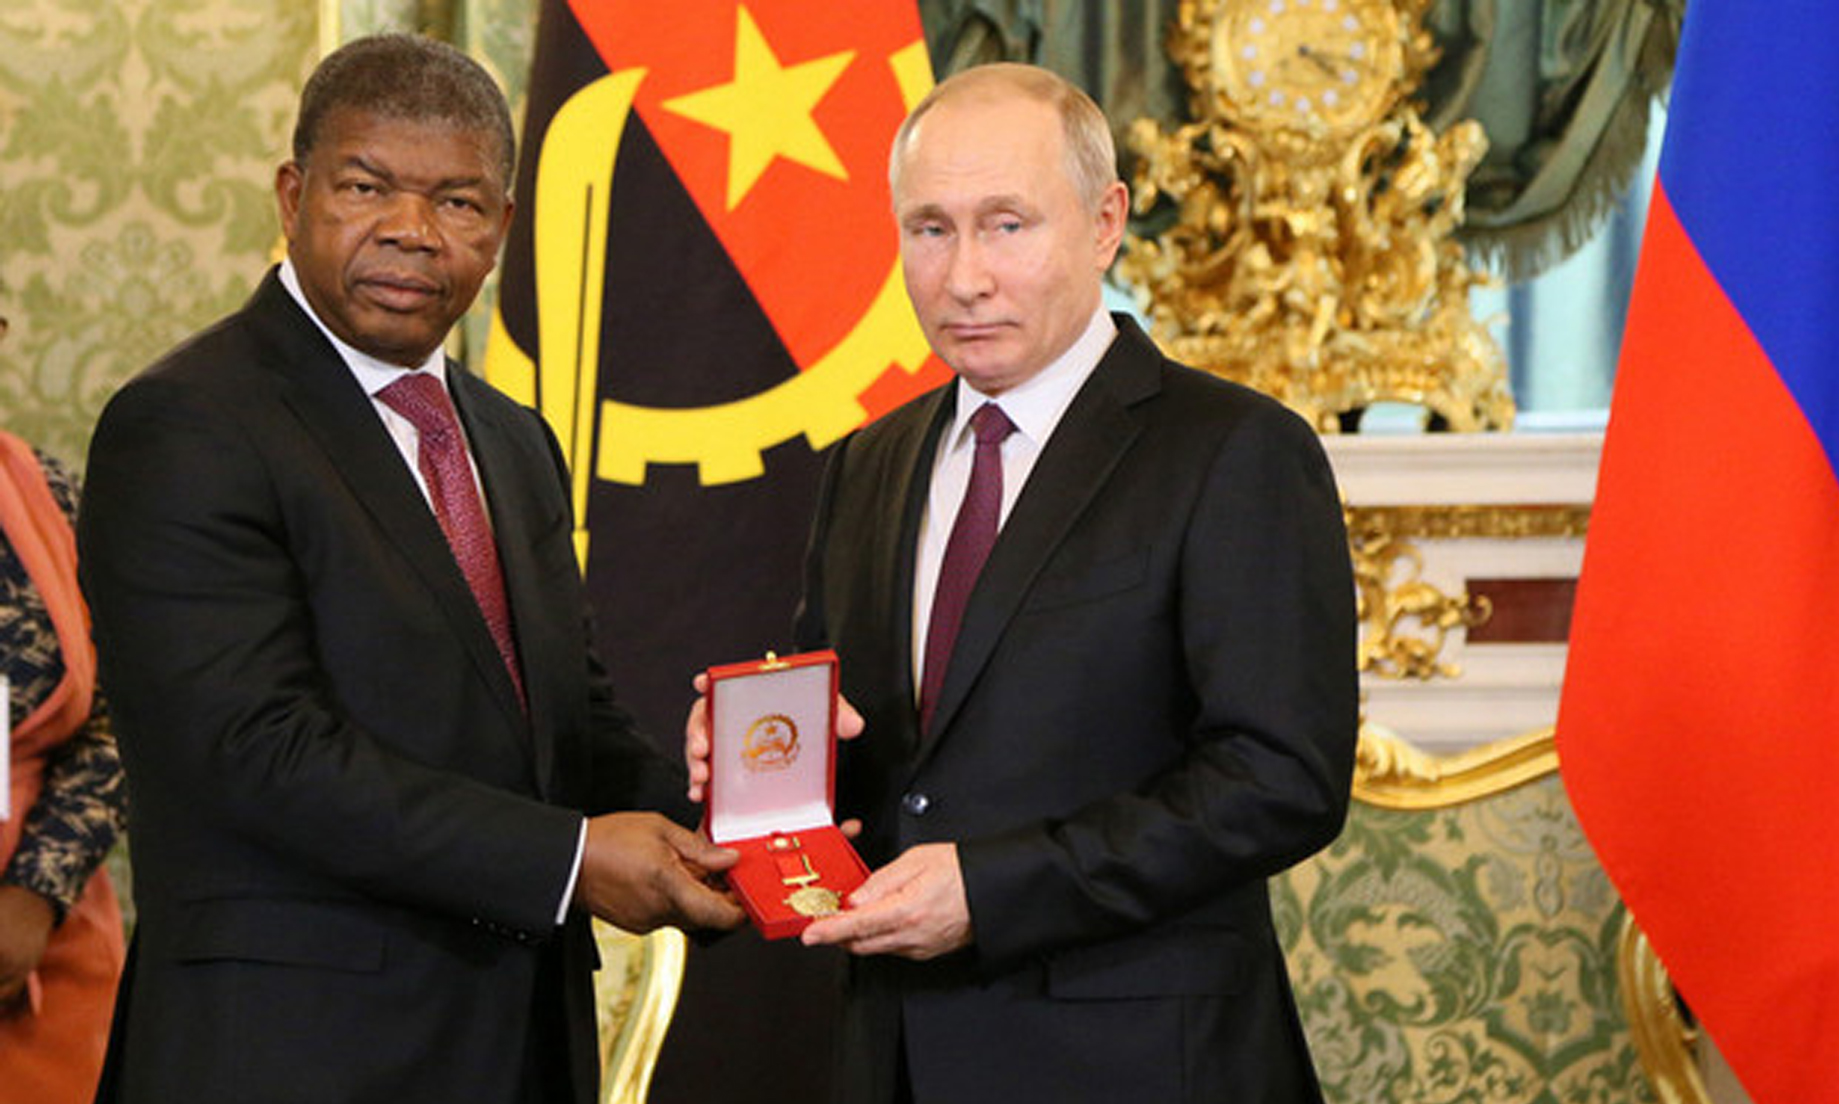 President Lourenço decorated Russian Pres Vladimir Putin with Angola’s highest award